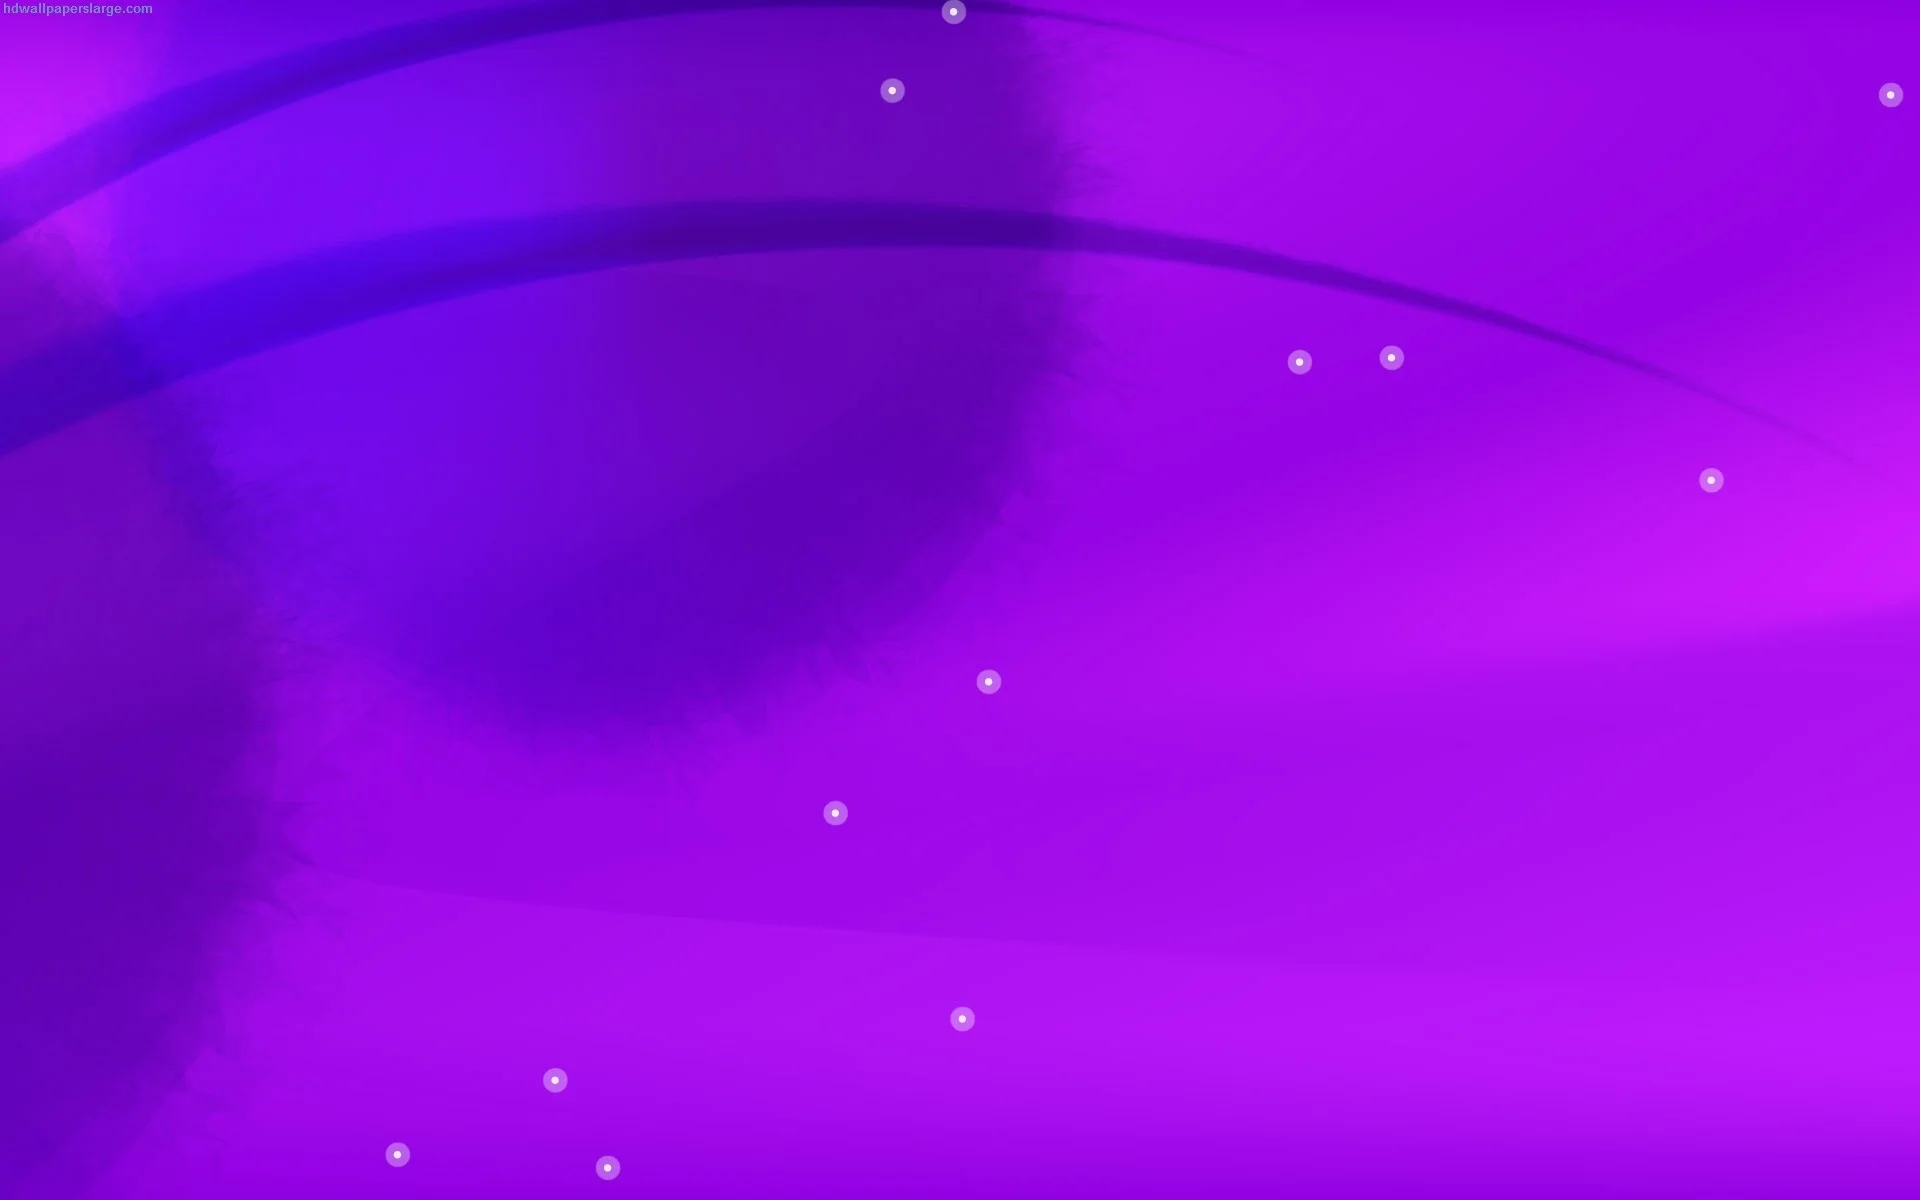 Plain purple hd wallpaper for your desktop background or desktop